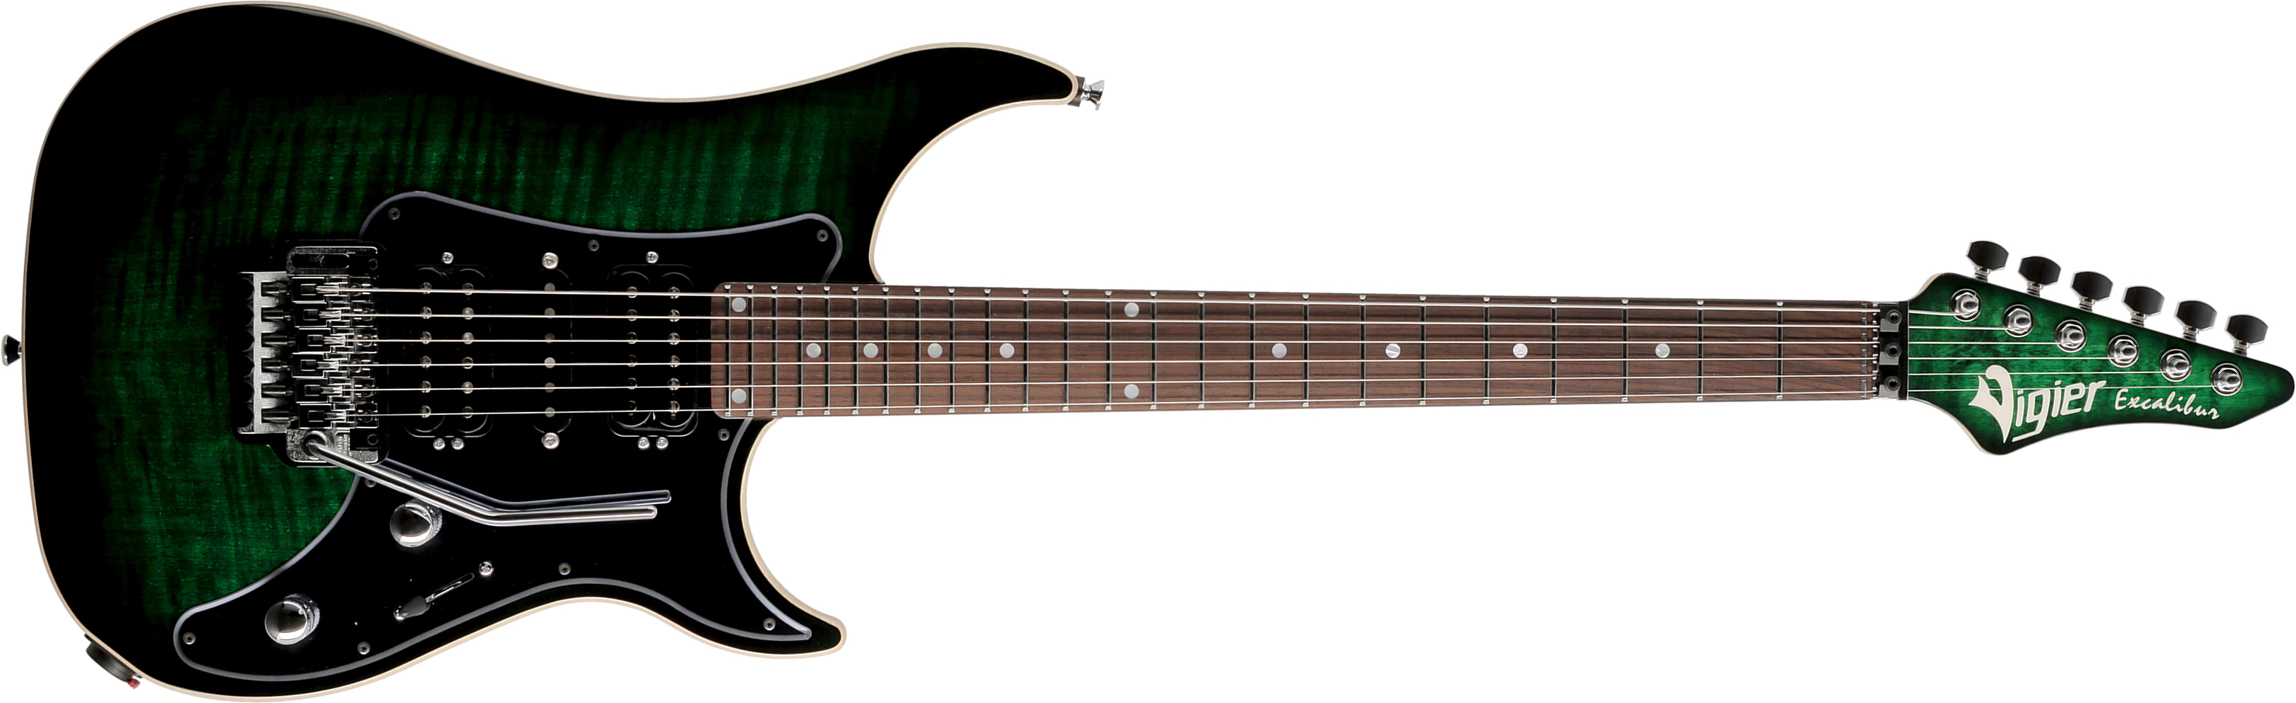 Vigier Excalibur Custom Hsh Fr Rw - Mysterious Green - Elektrische gitaar in Str-vorm - Main picture